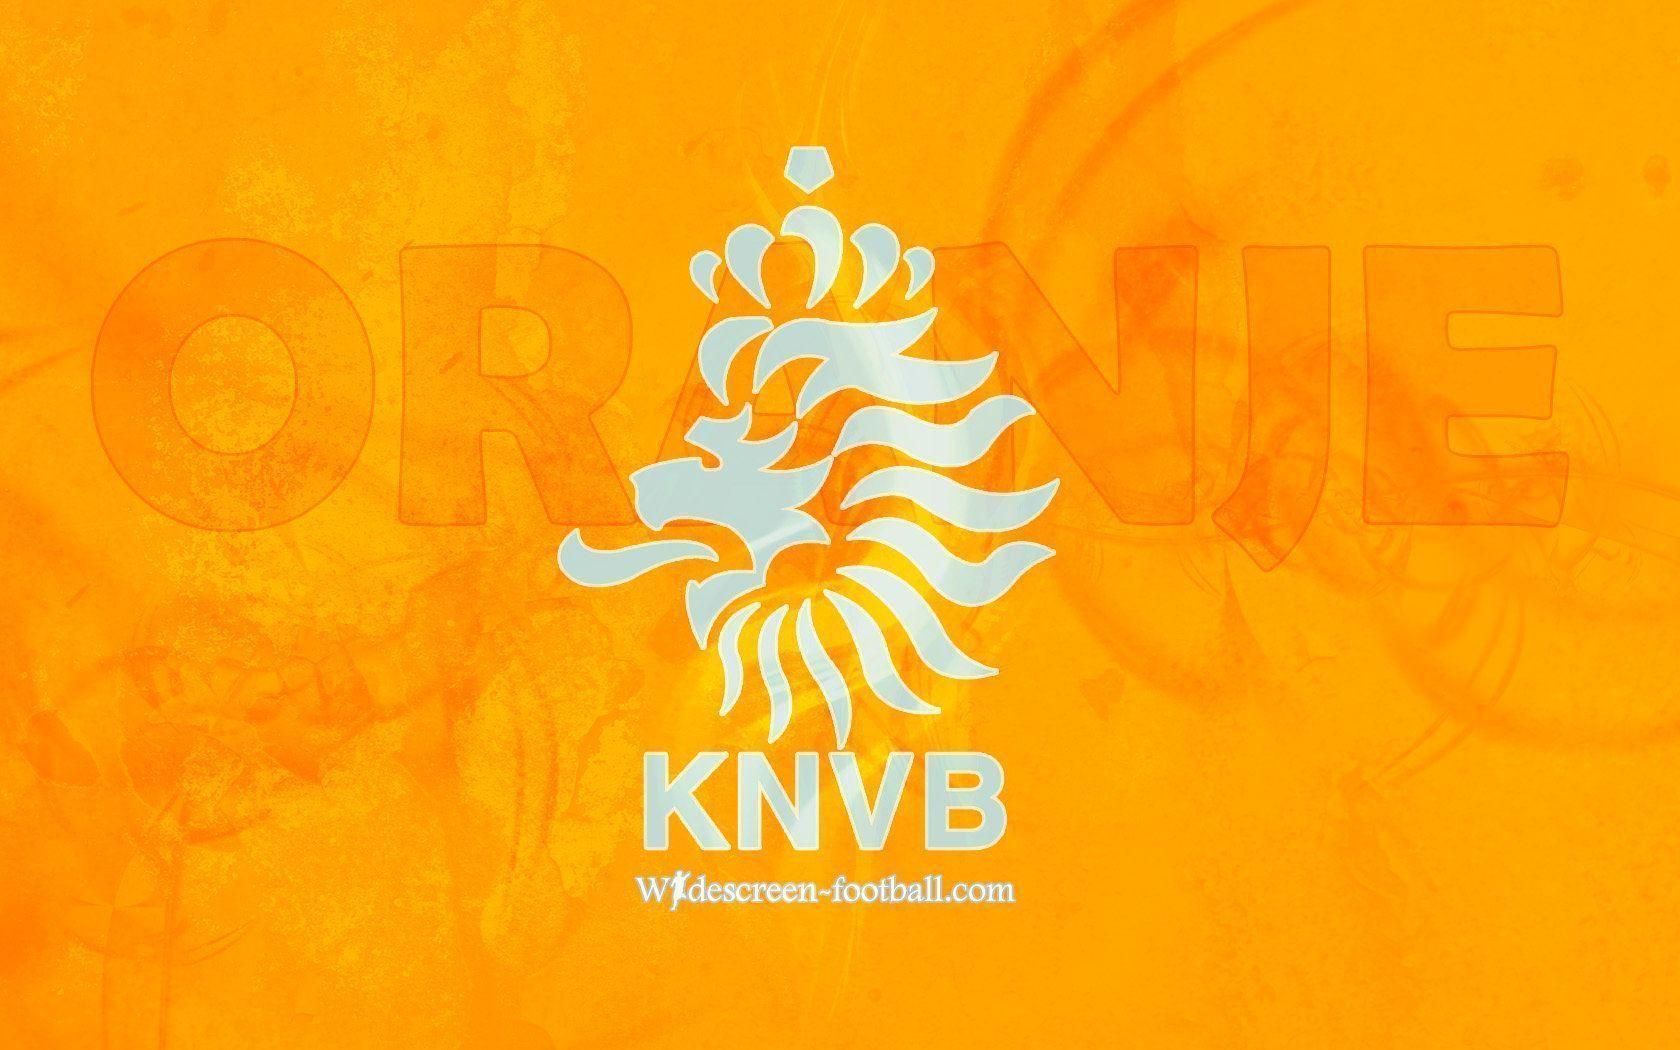 Netherlands national football team logo for computer desktop